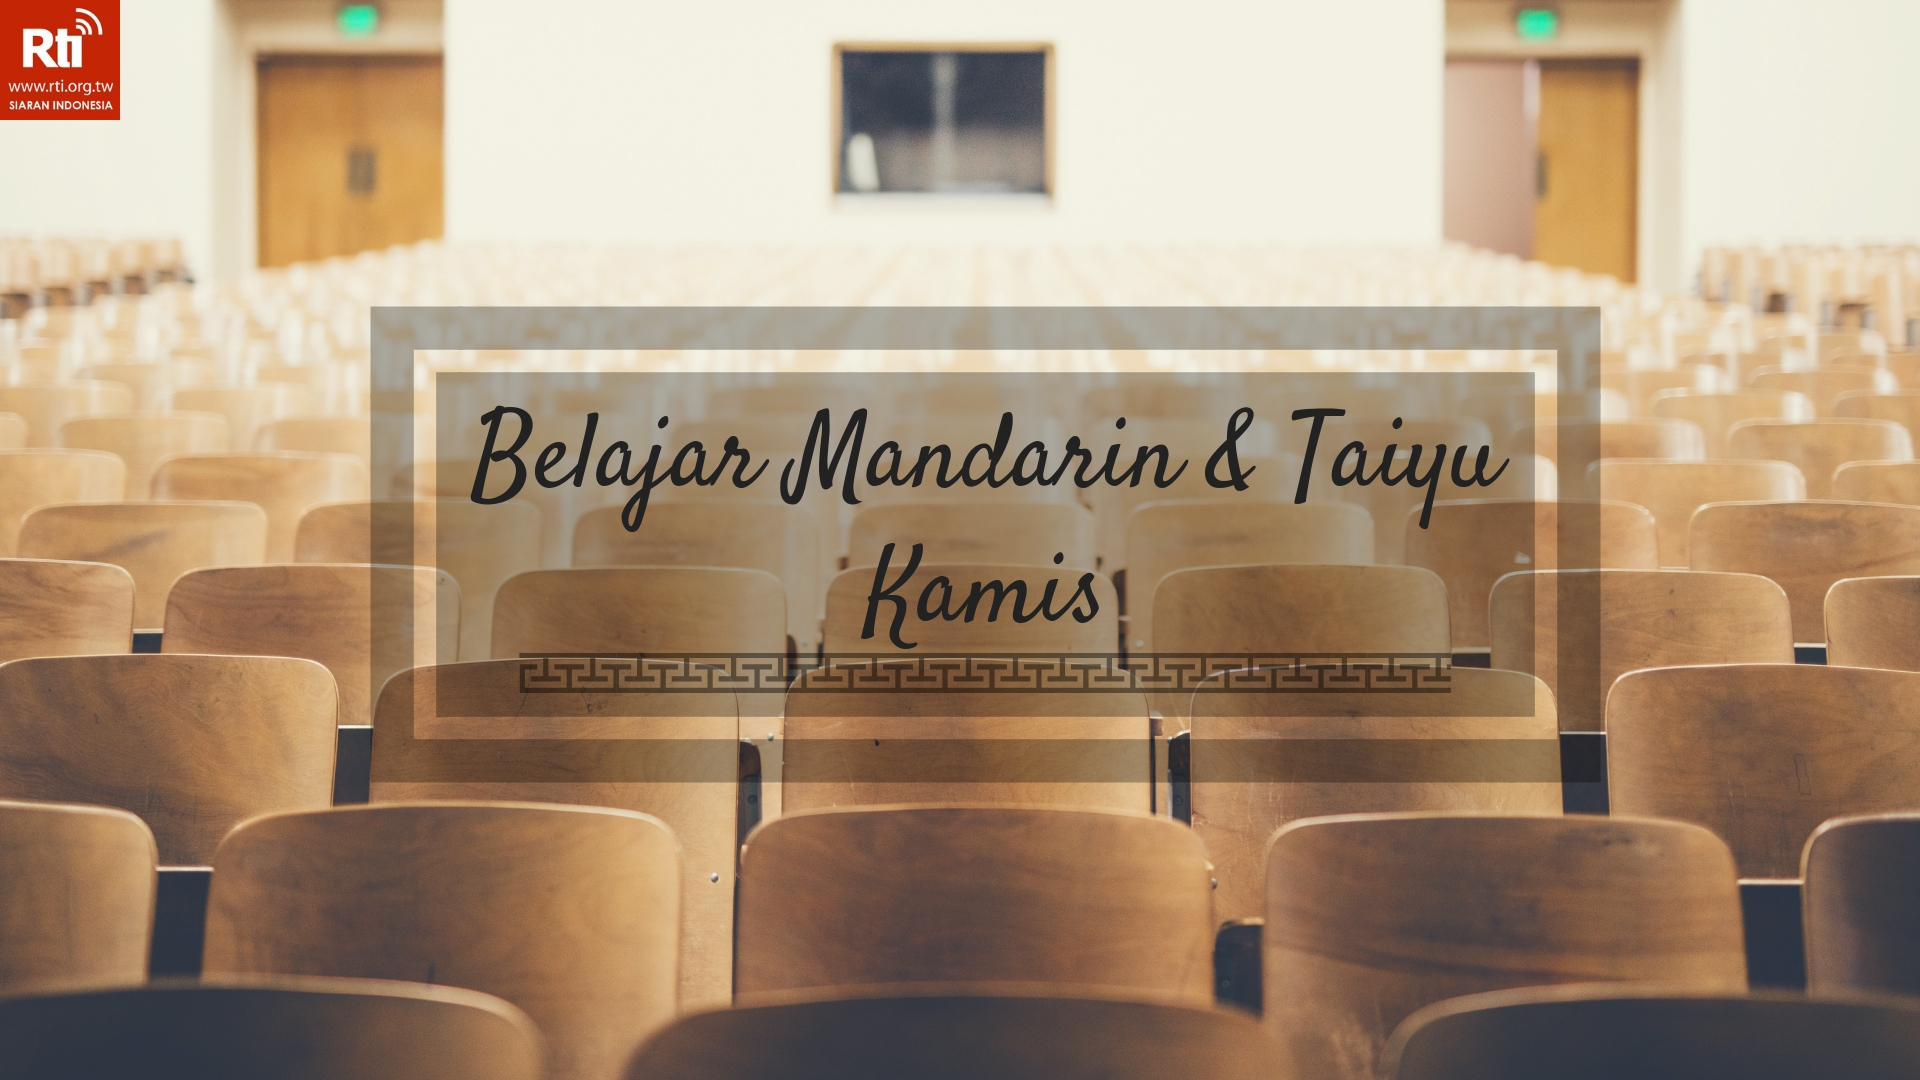 Belajar Mandarin, Taiyu dan Bahasa Indonesia: Tinggal di rumah penduduk 寄宿在當地人的家裡